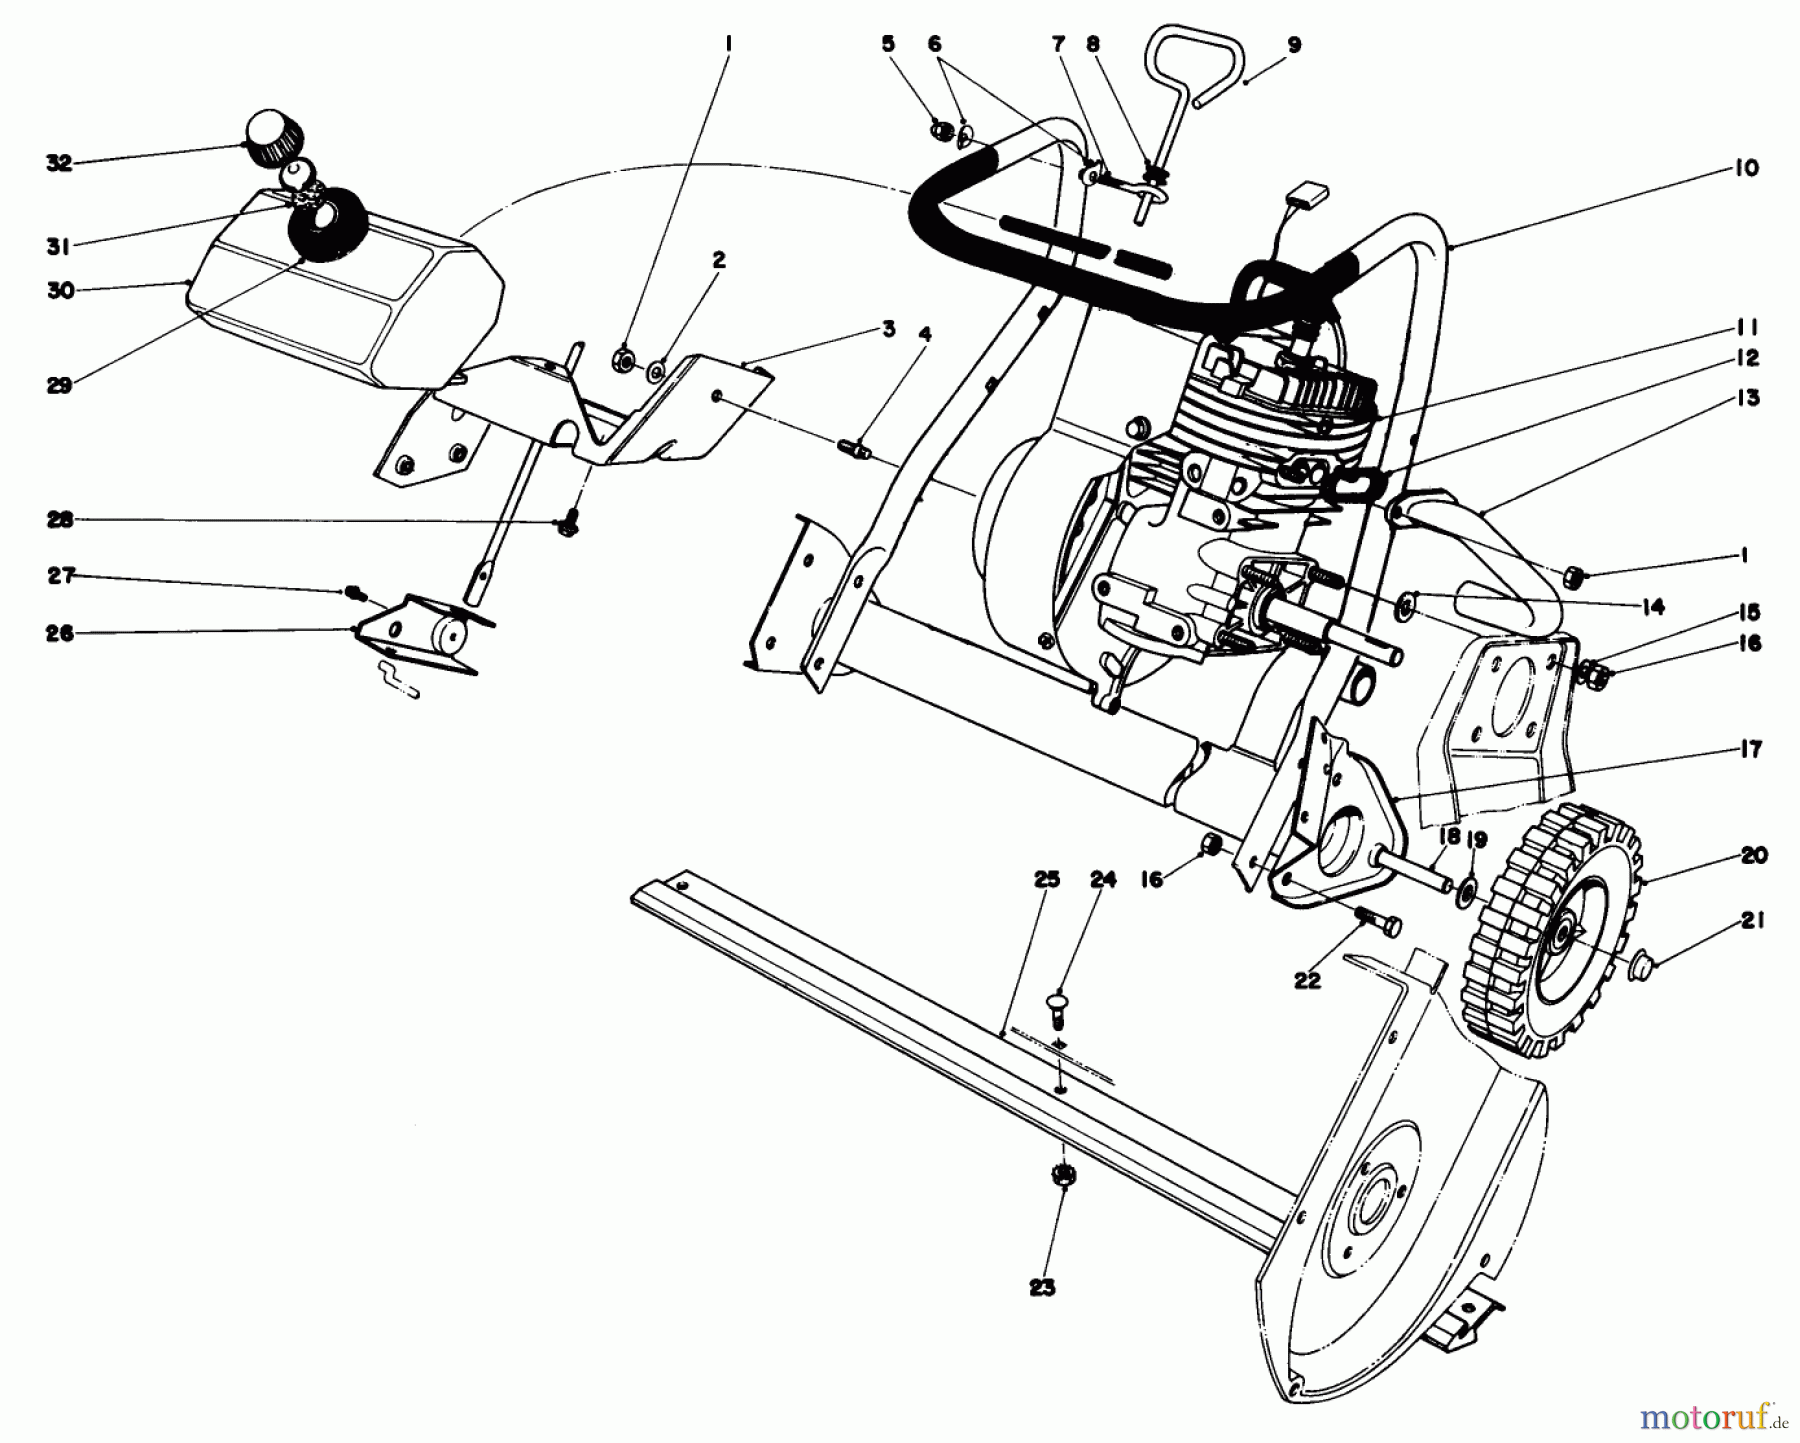  Toro Neu Snow Blowers/Snow Throwers Seite 1 38120 (S-200) - Toro S-200 Snowthrower, 1981 (1000351-1999999) ENGINE ASSEMBLY (MODEL 38120)